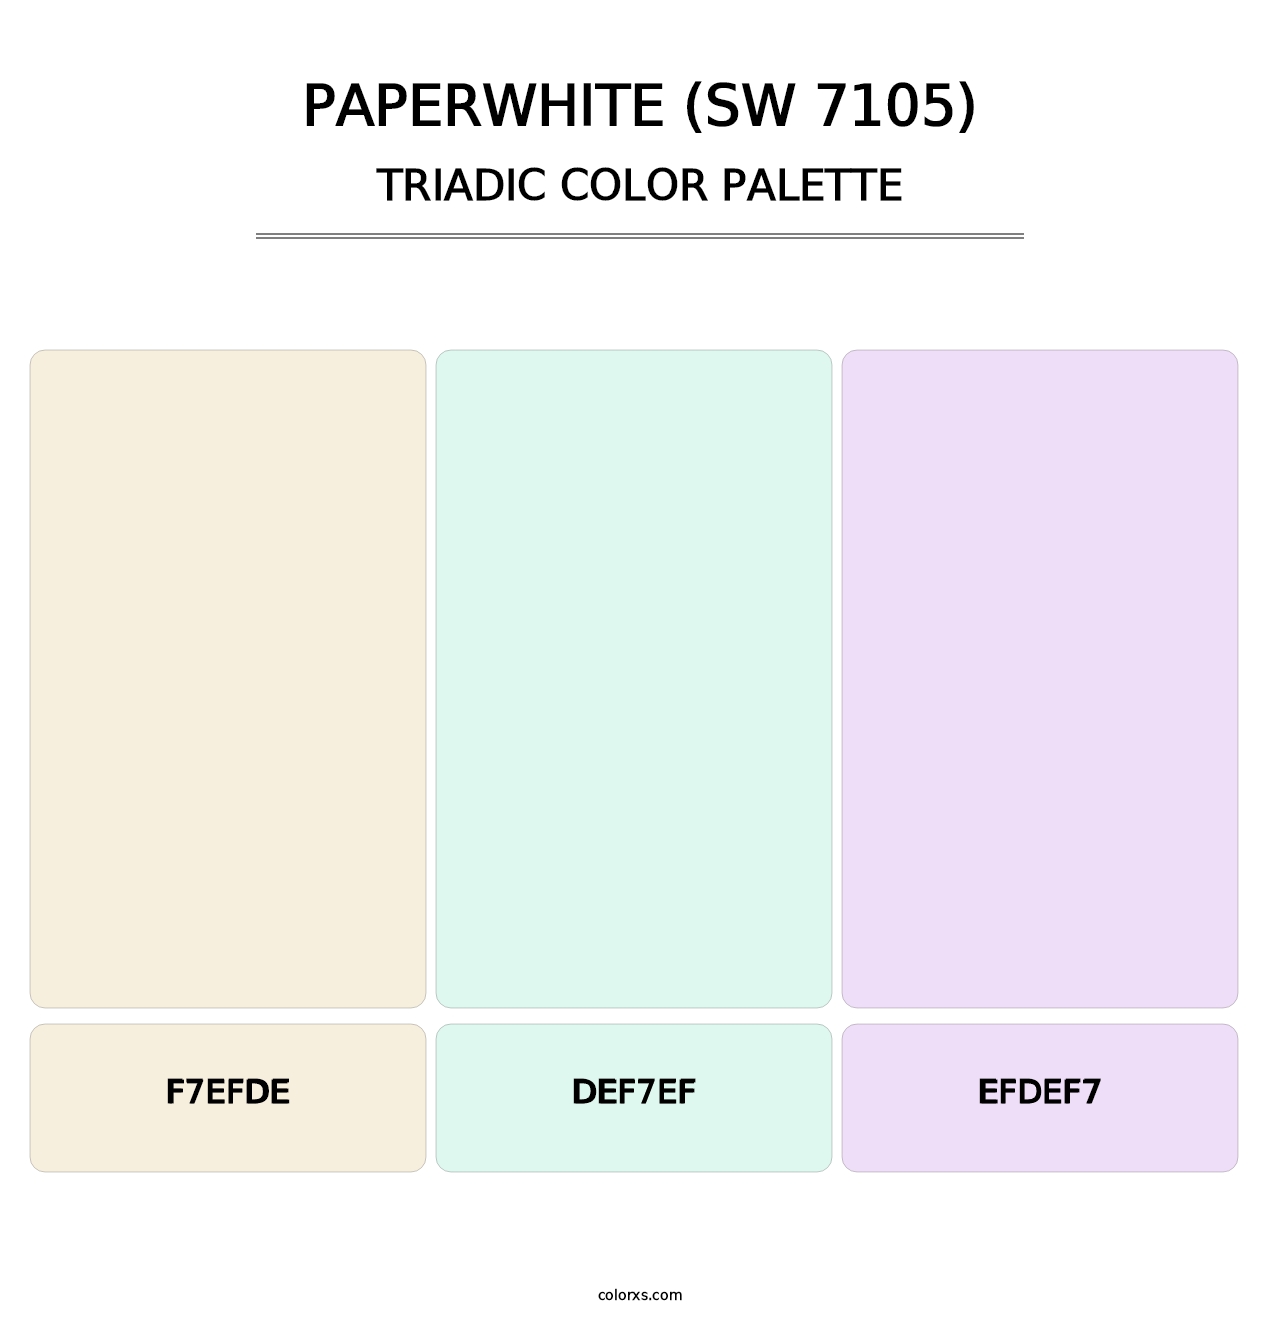 Paperwhite (SW 7105) - Triadic Color Palette